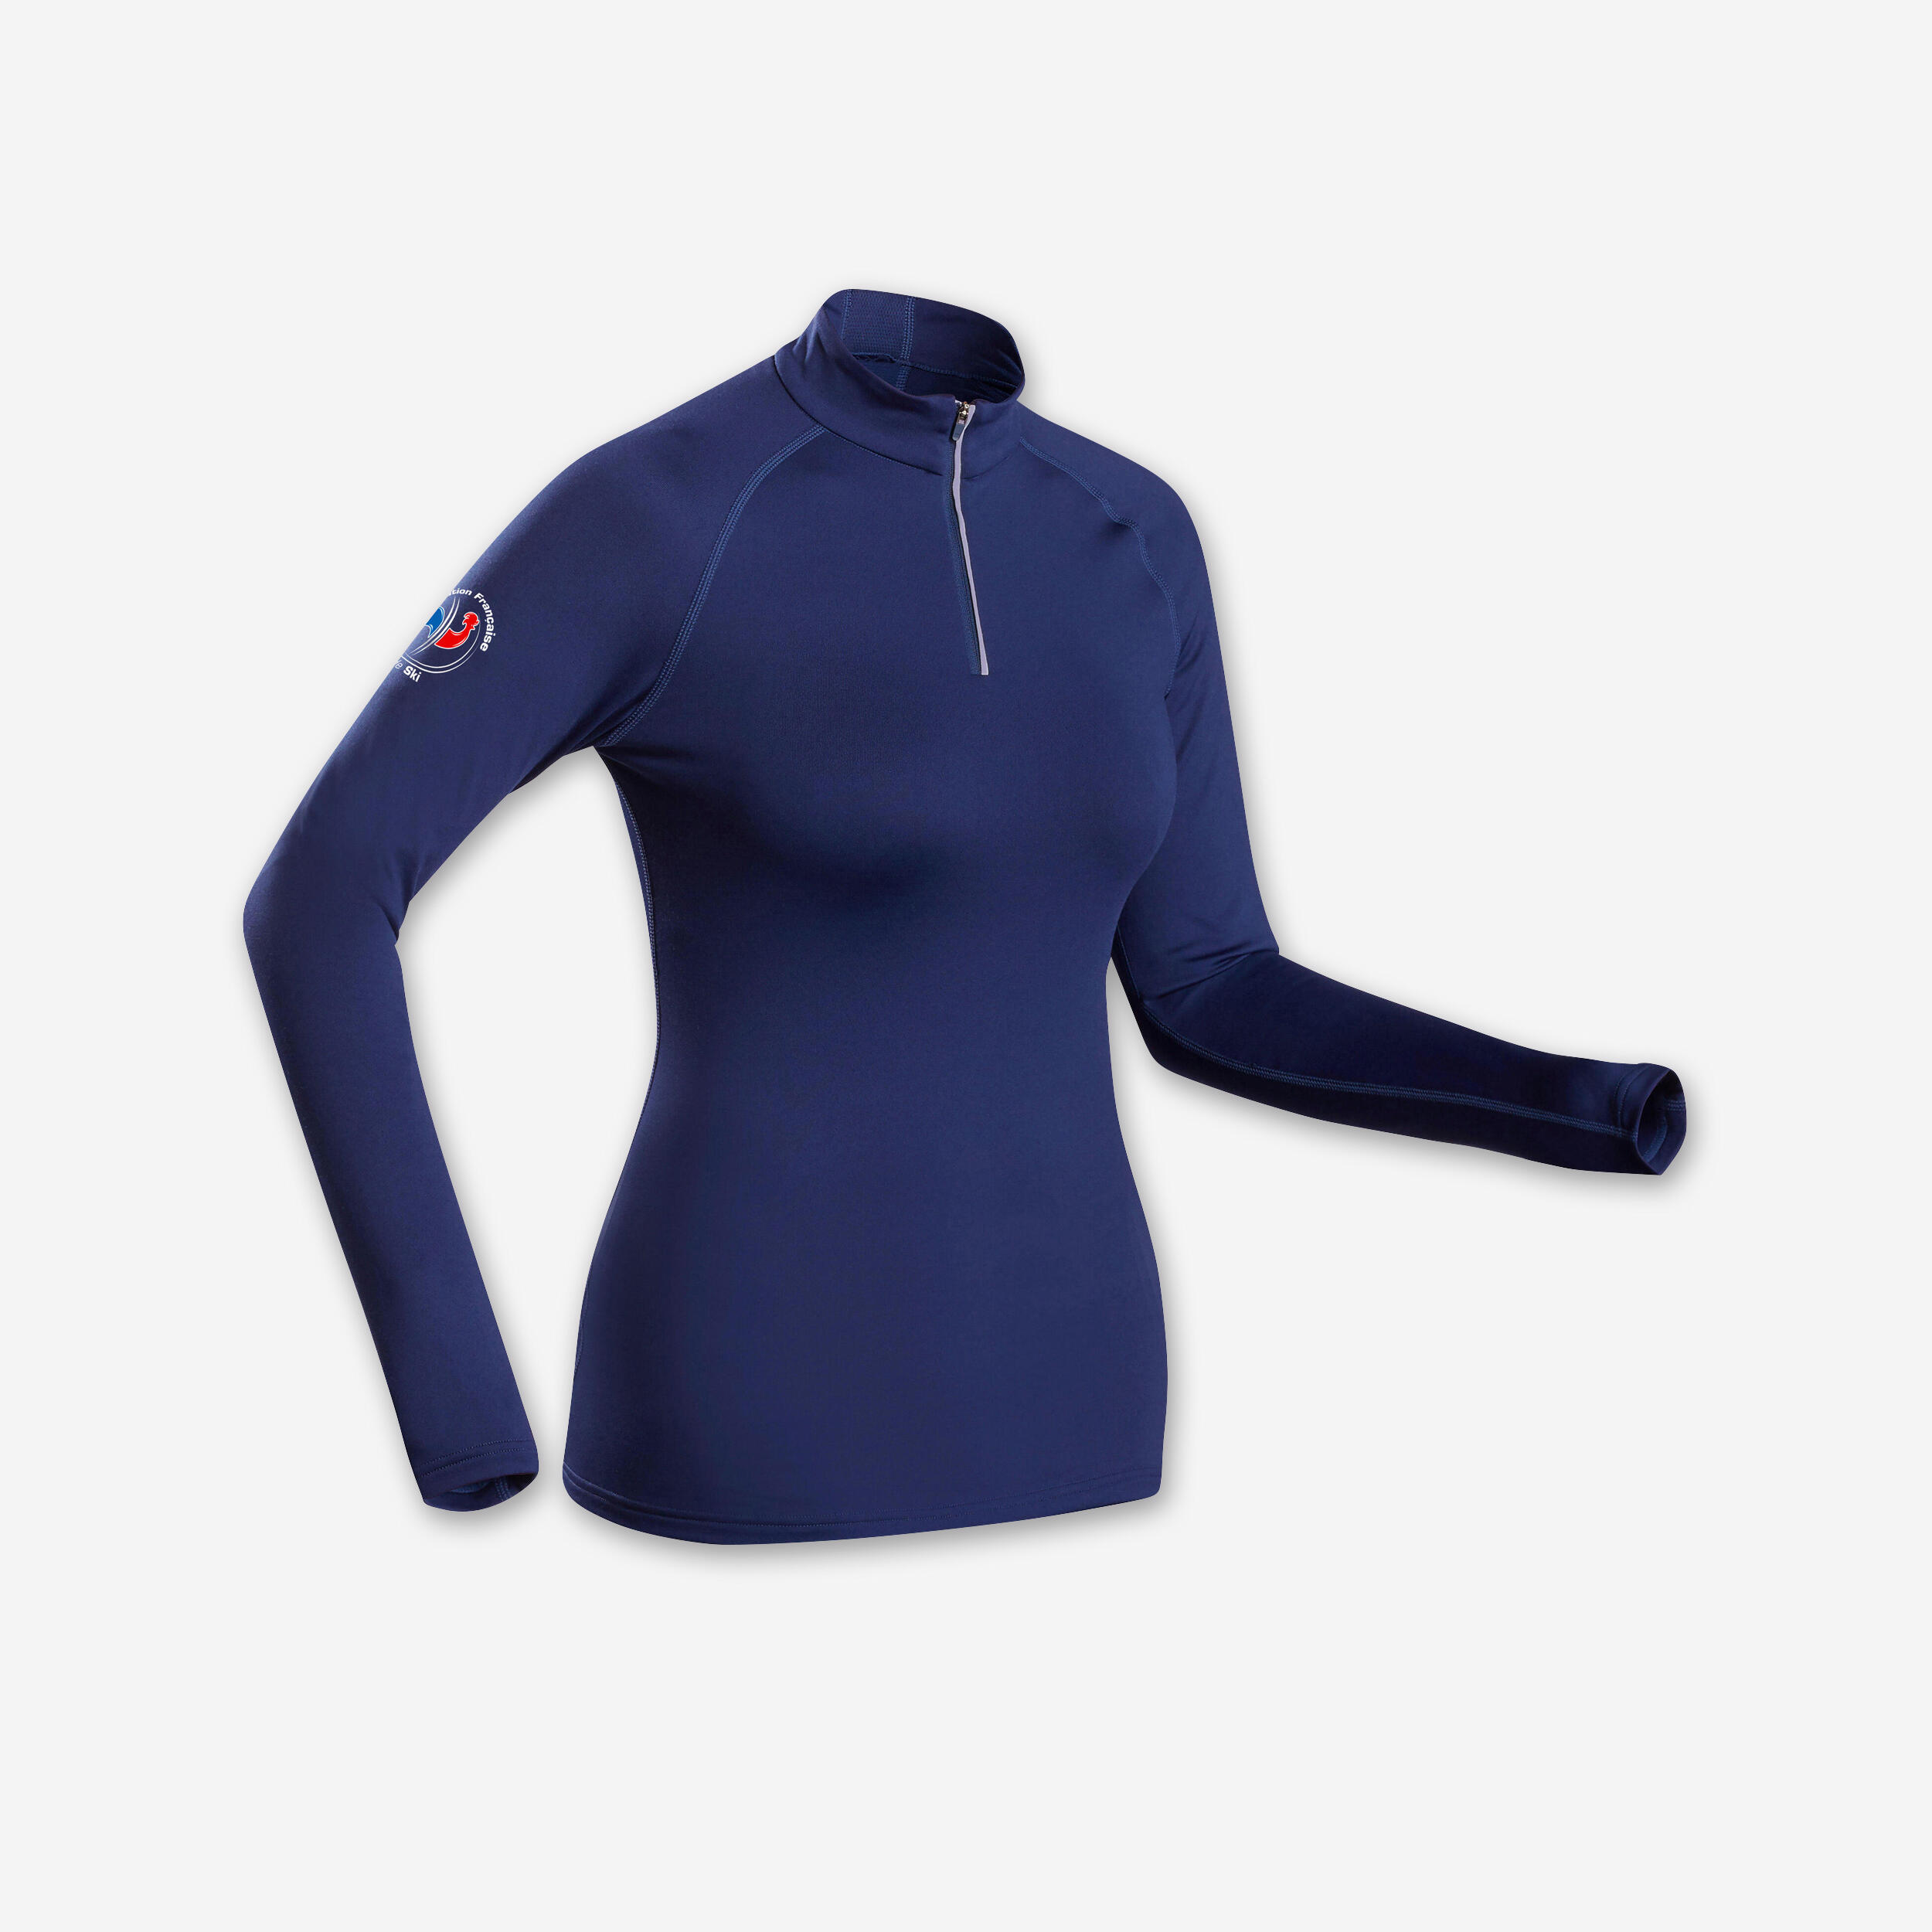 Women's 500 FFS thermal base layer 1/2 zip ski top - navy blue 1/2